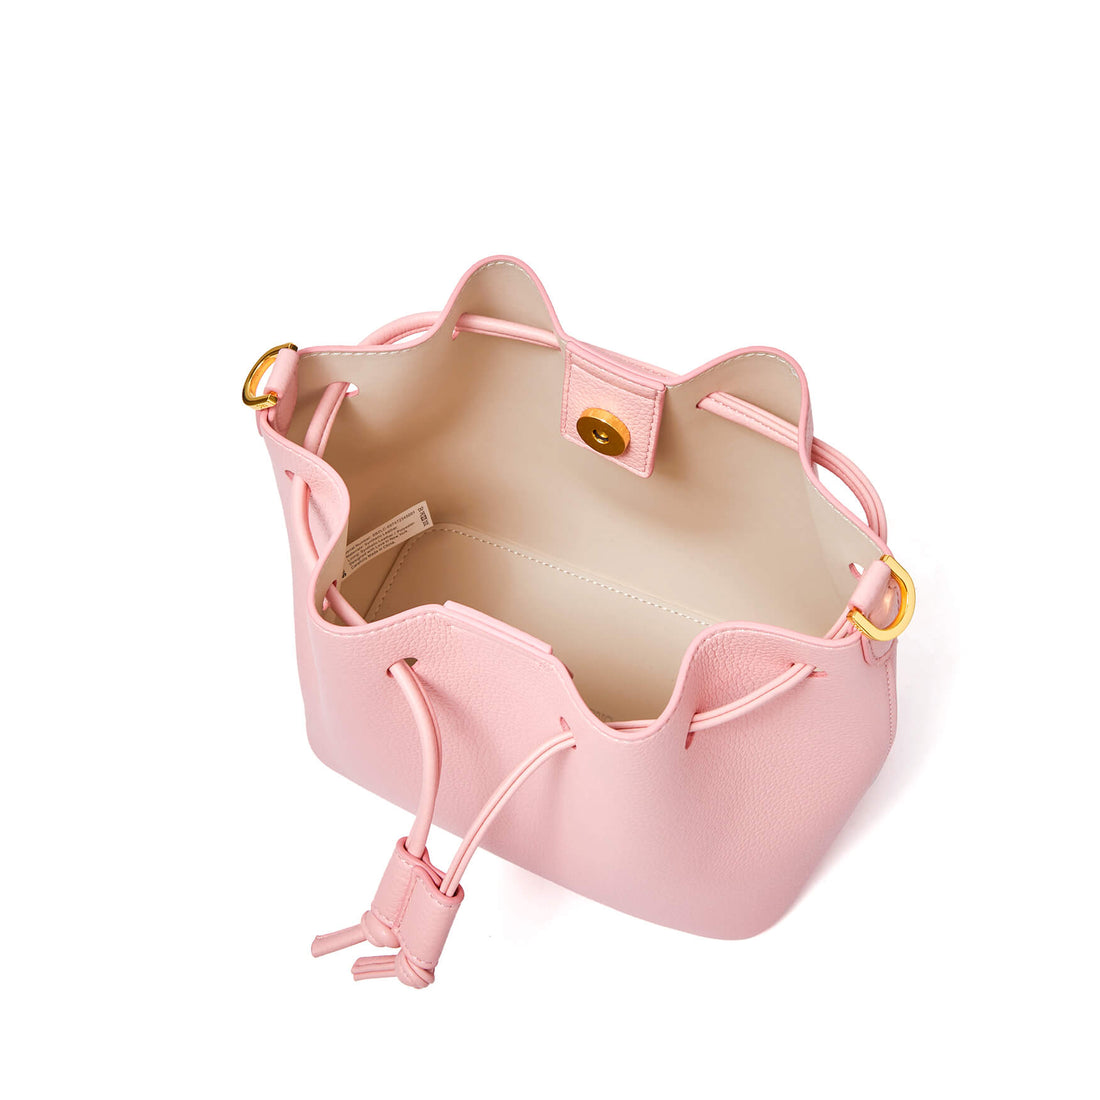 SINBONO Luxury Designer Pink Bag- Women's Selena Ruched Hobo Bag